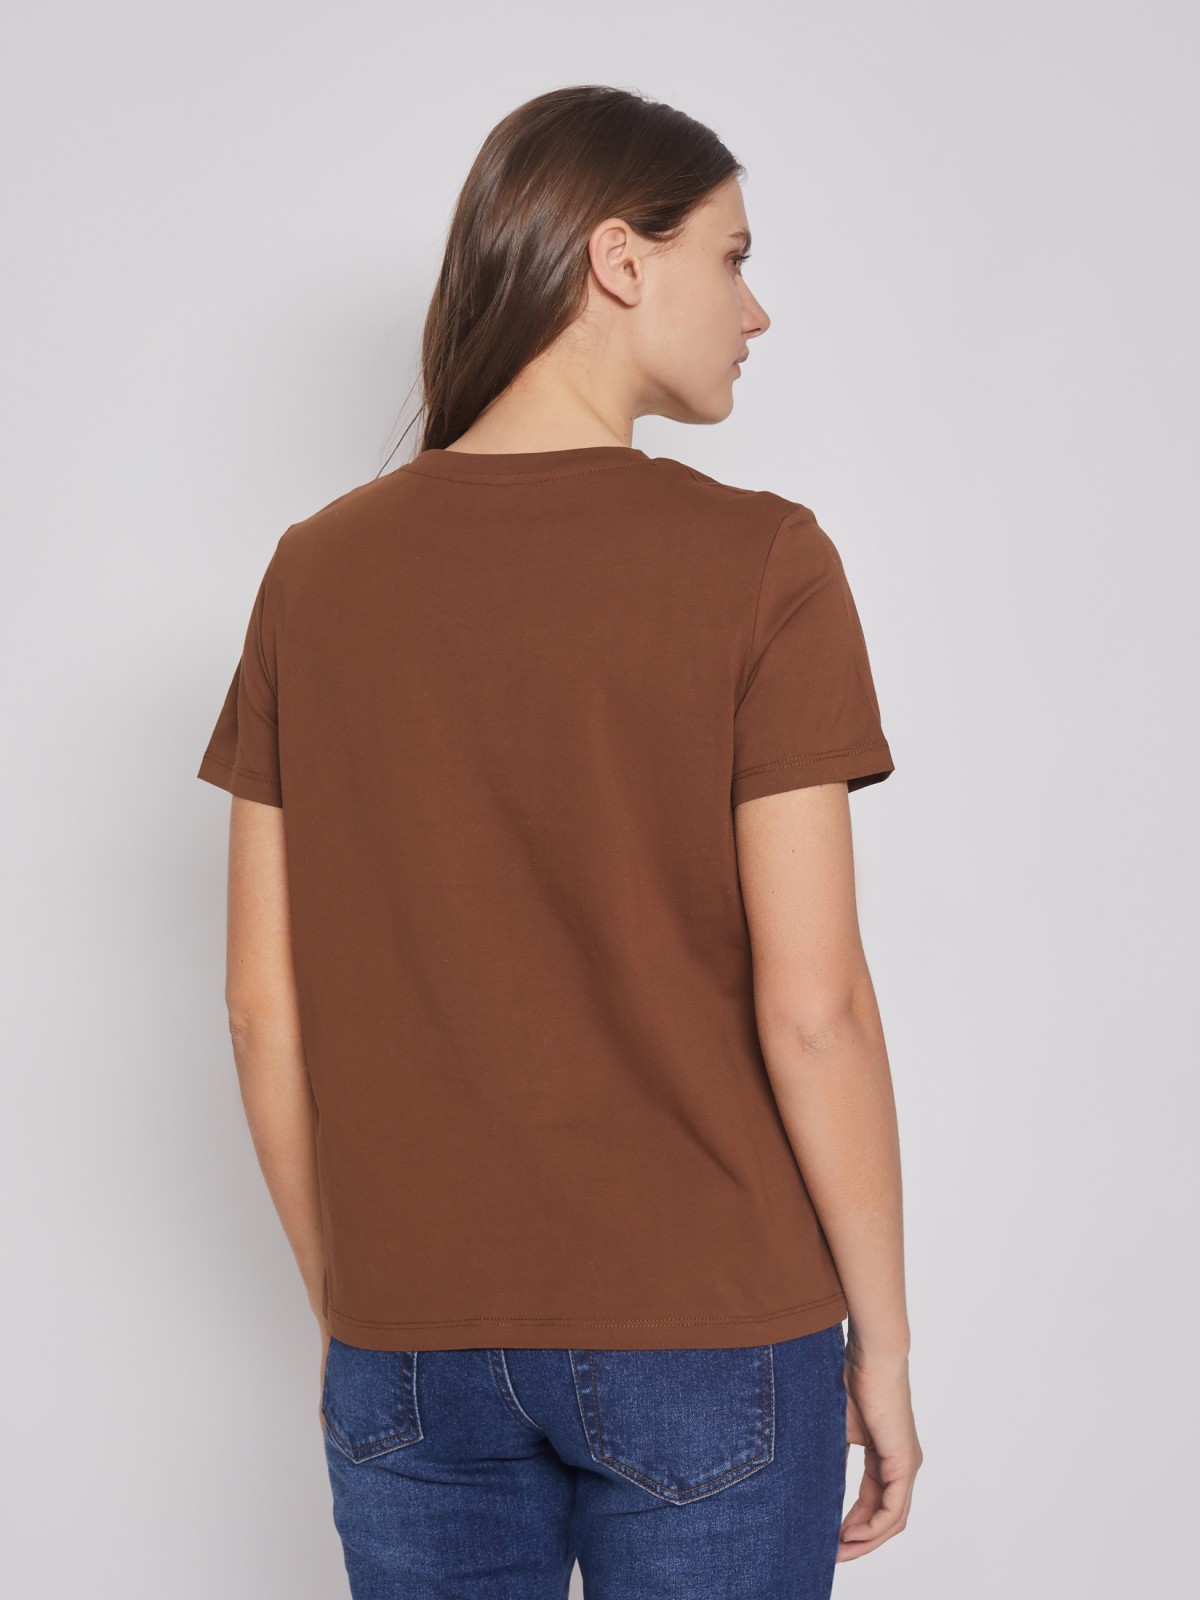 Однотонная футболка с коротким рукавом zolla 22231321Y072, цвет коричневый, размер XS - фото 6